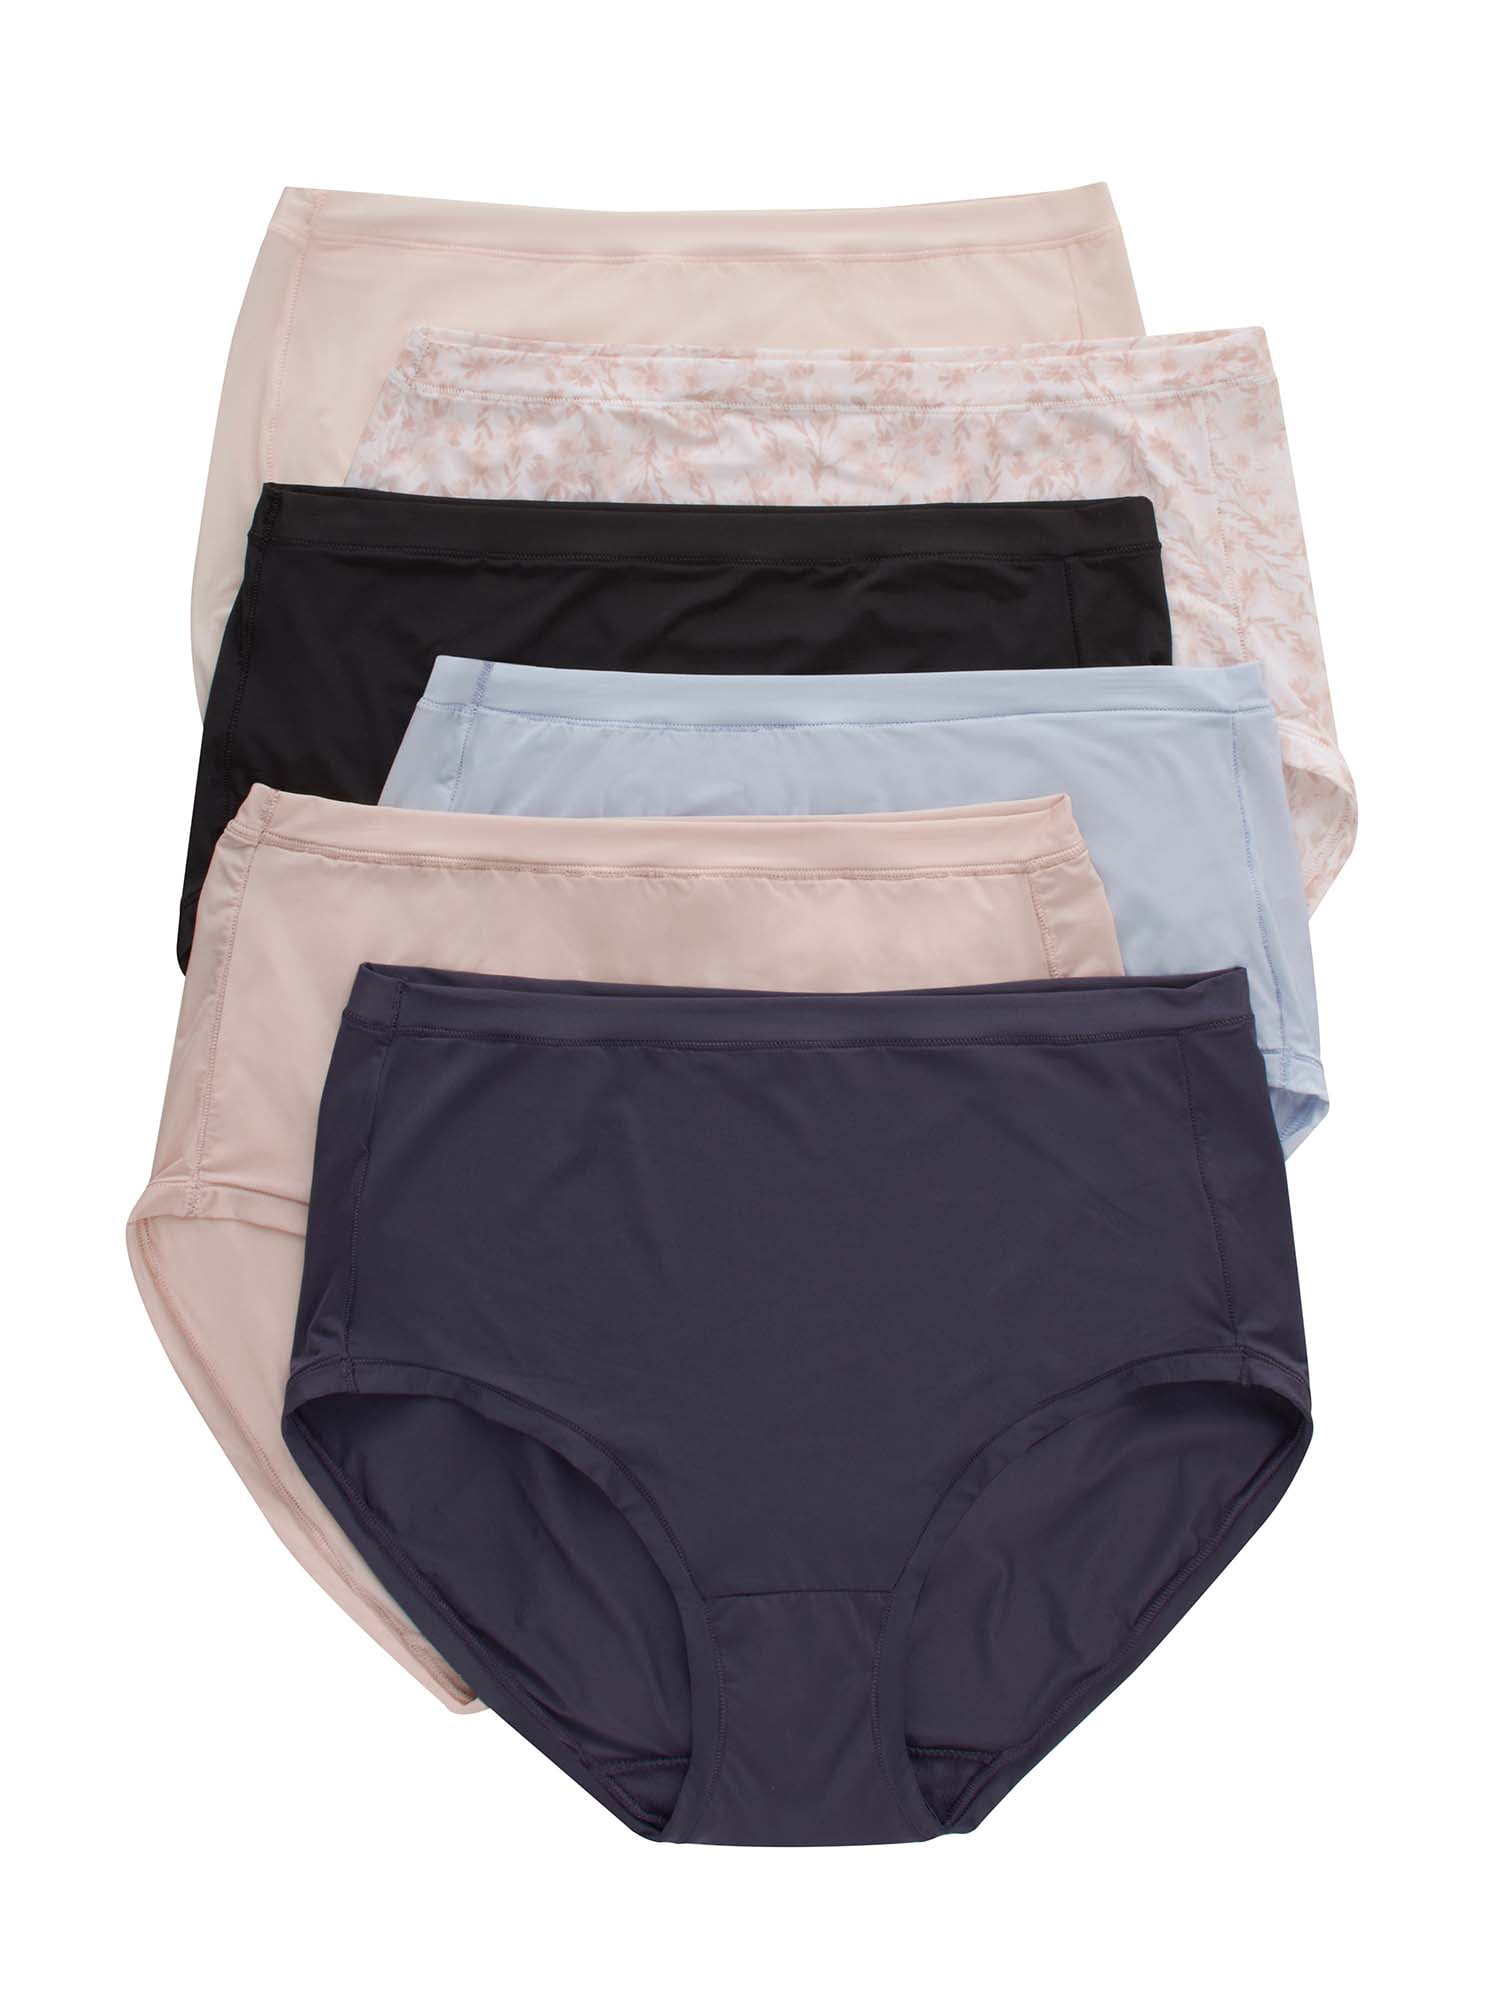 Hanes Women's Comfort Flex Fit Stretch Microfiber Bikini Underwear